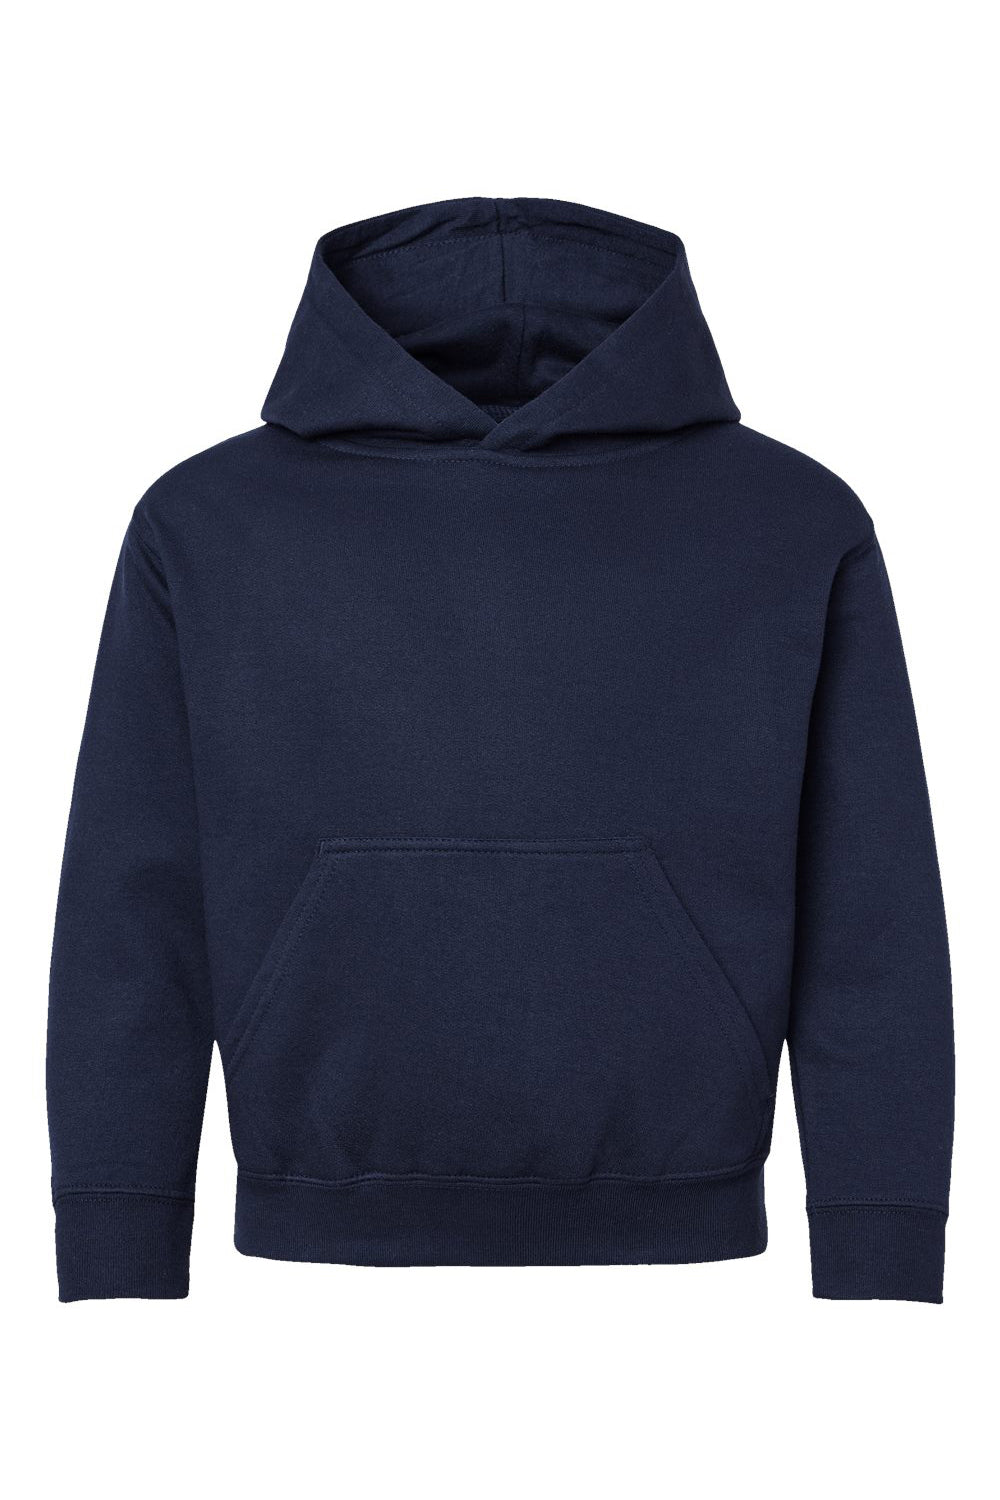 LAT 2296 Youth Fleece Hooded Sweatshirt Hoodie Navy Blue Flat Front